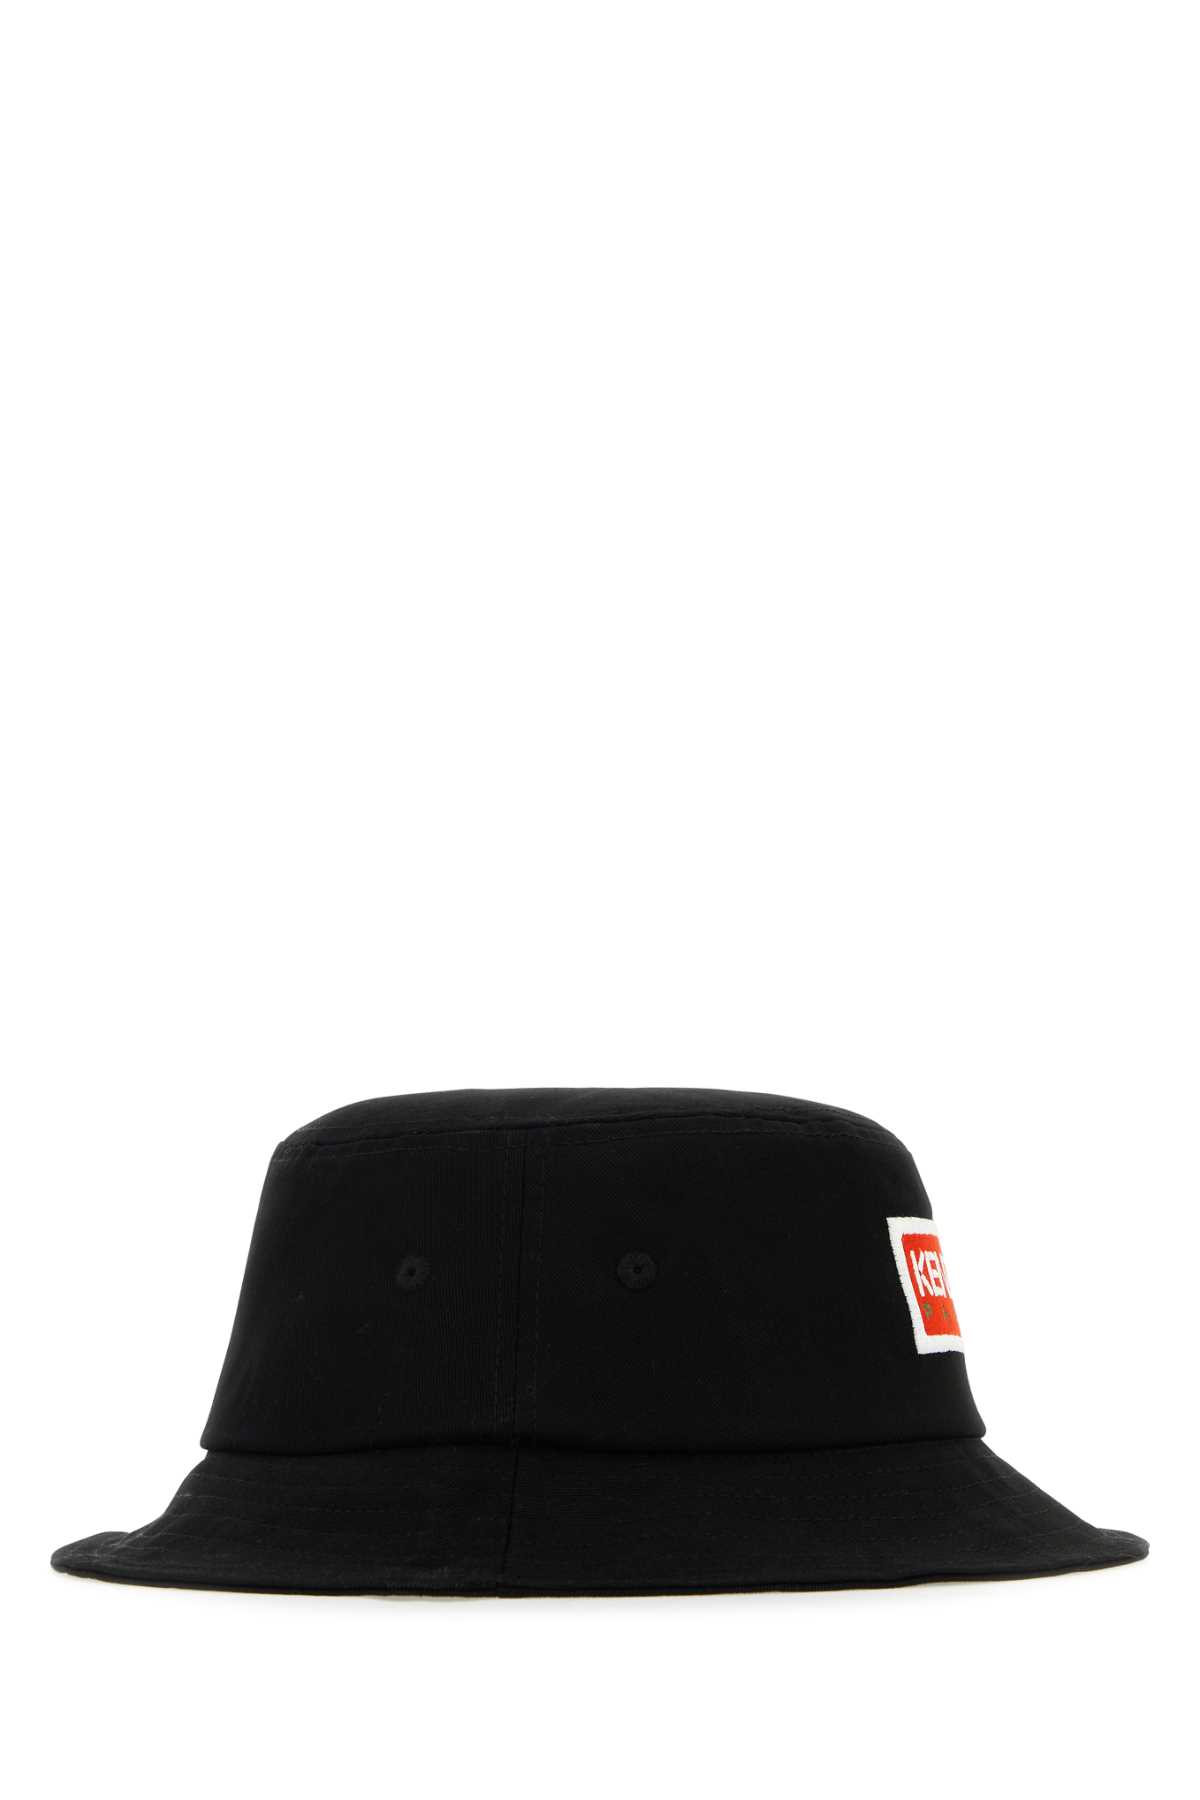 KENZO BLACK COTTON BUCKET HAT